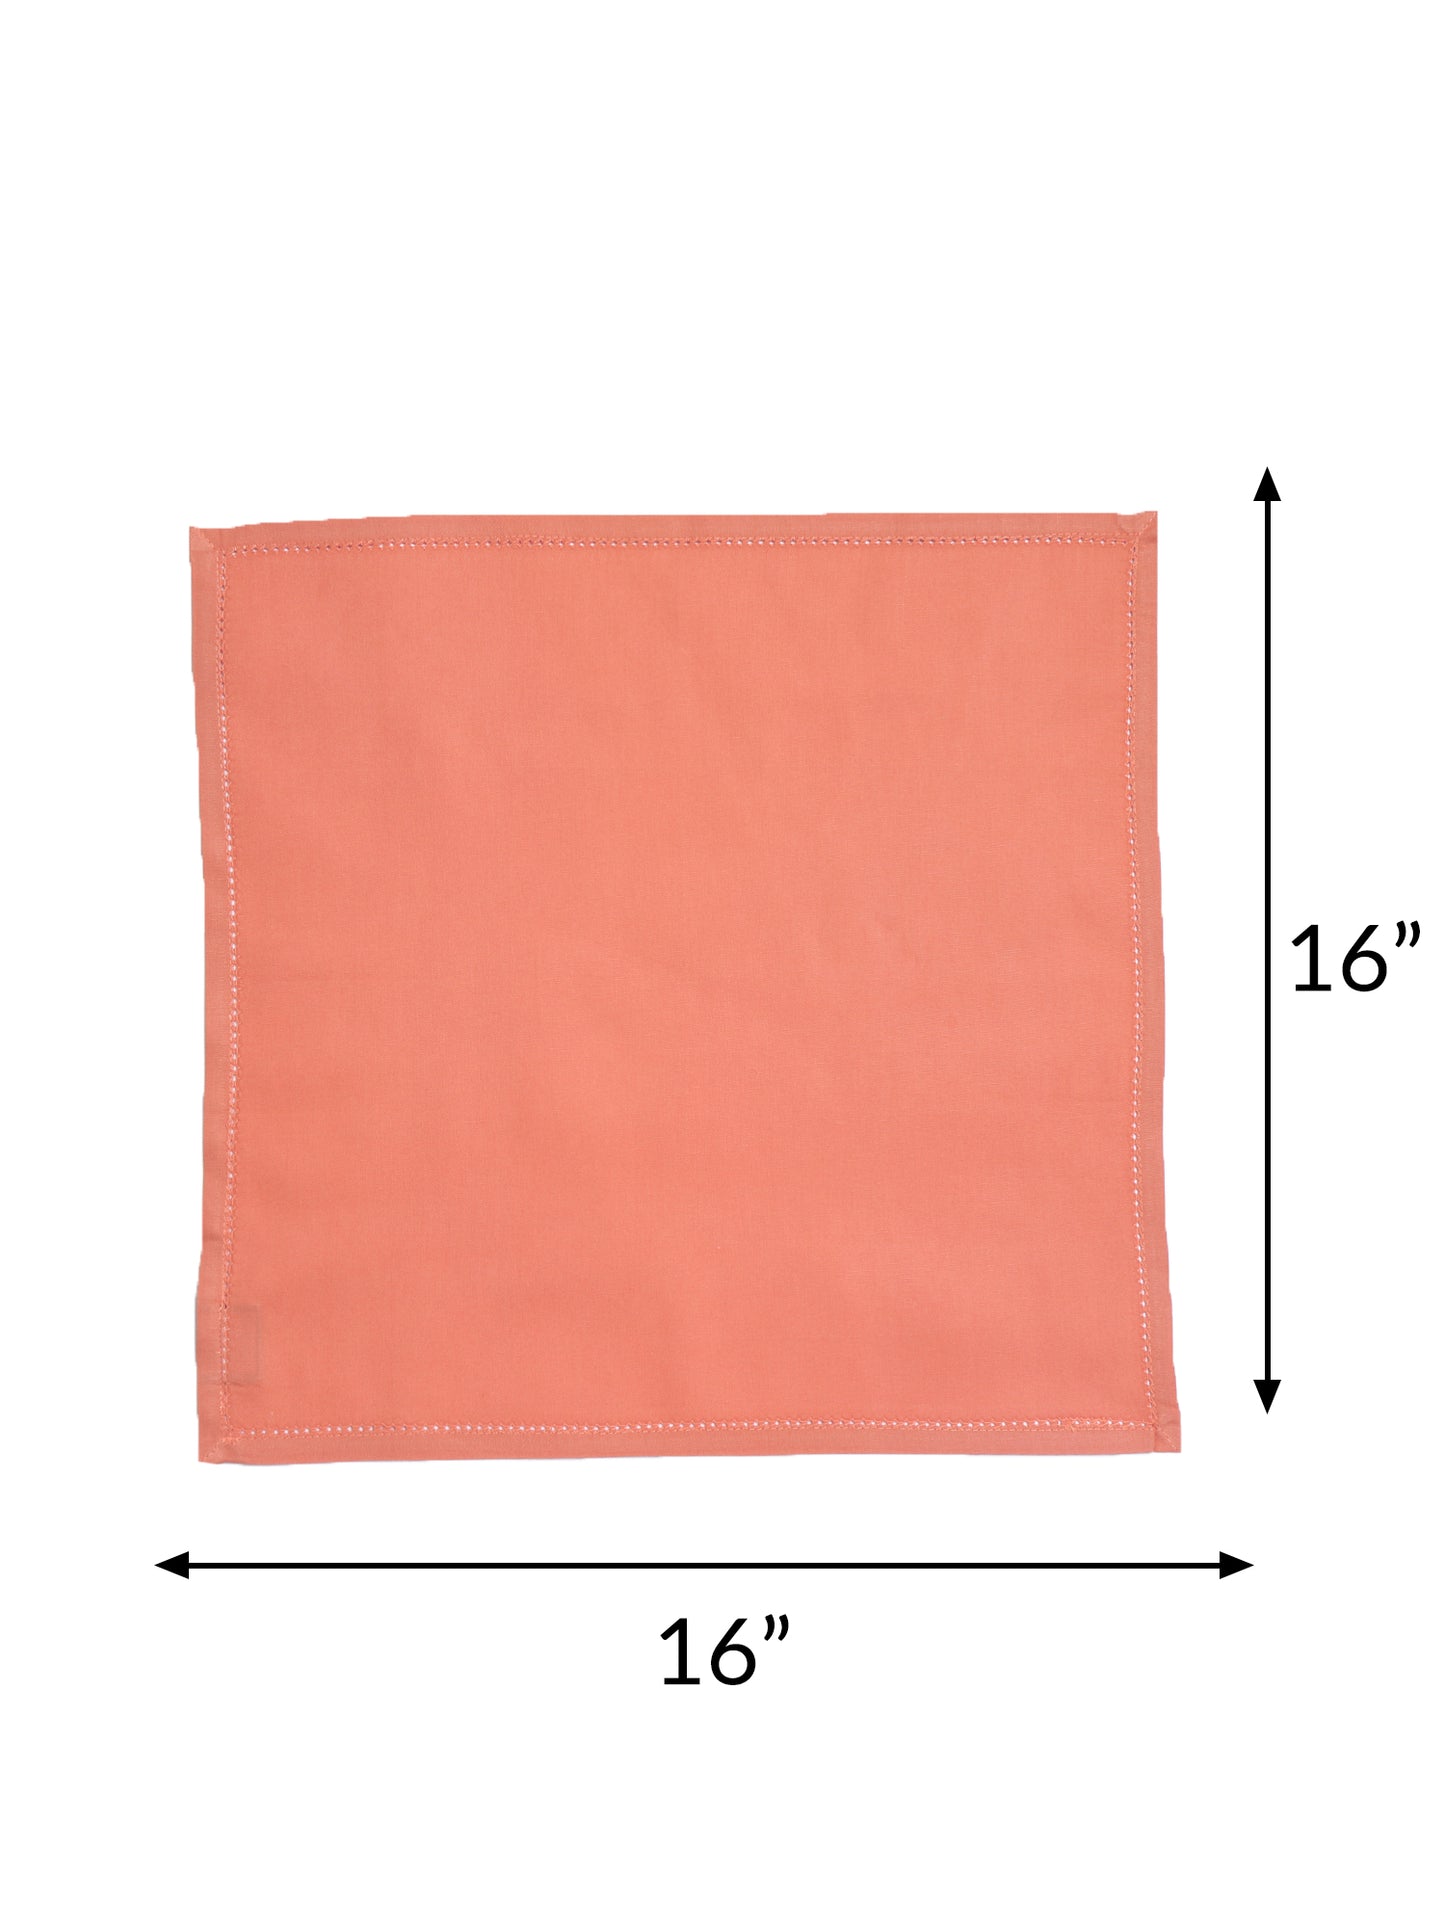 fagotting embroidered set of 6 dinner napkins in dark coral pink color - 16x16 inch